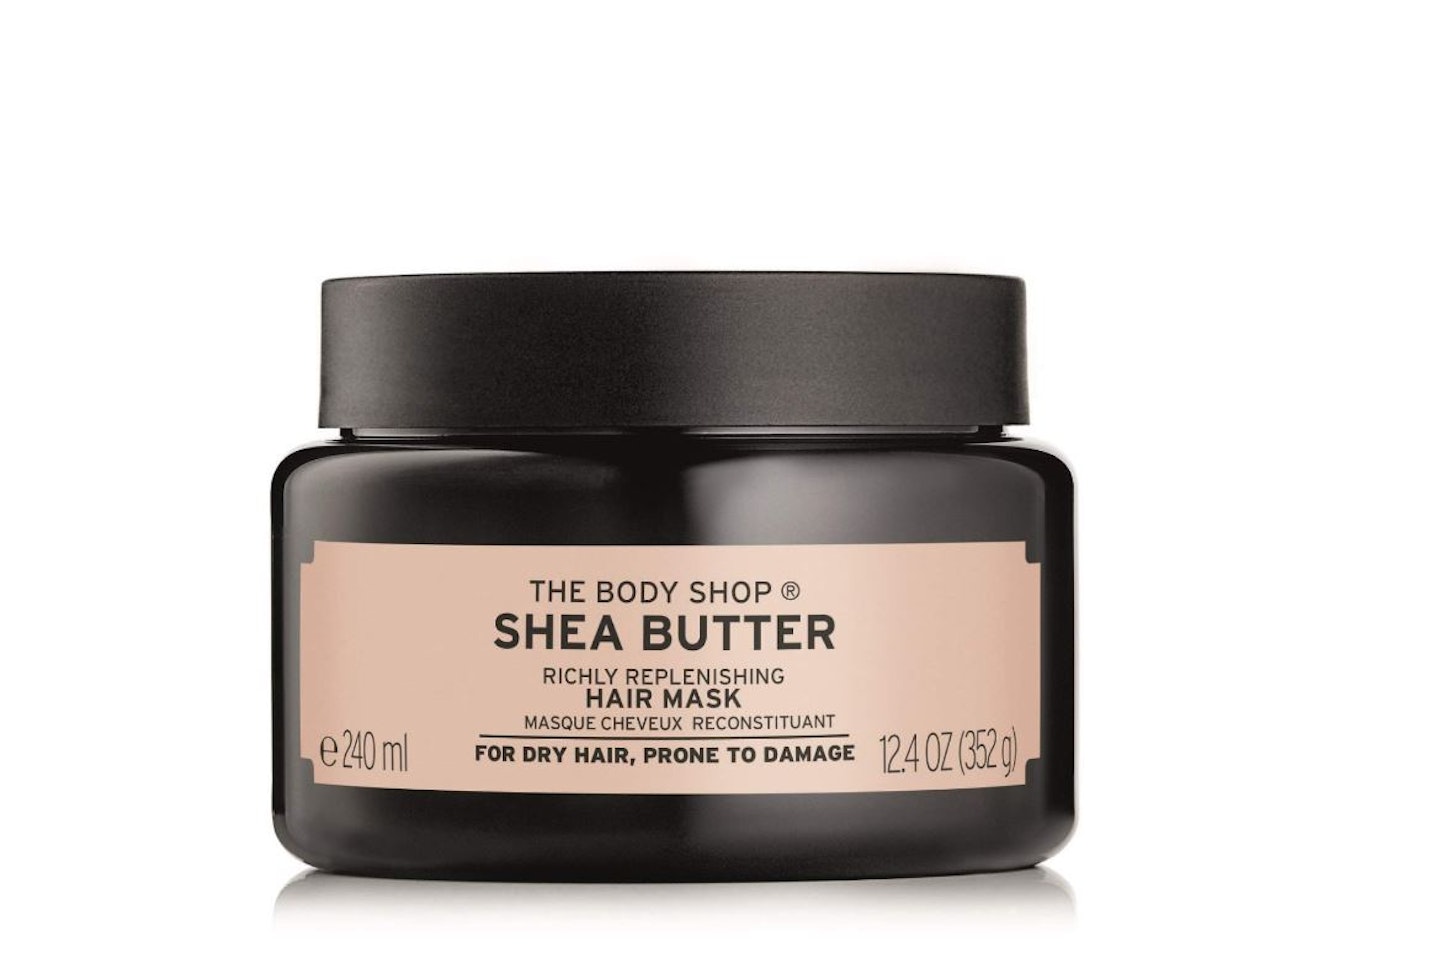 The Body Shop Shea Butter Hair Mask